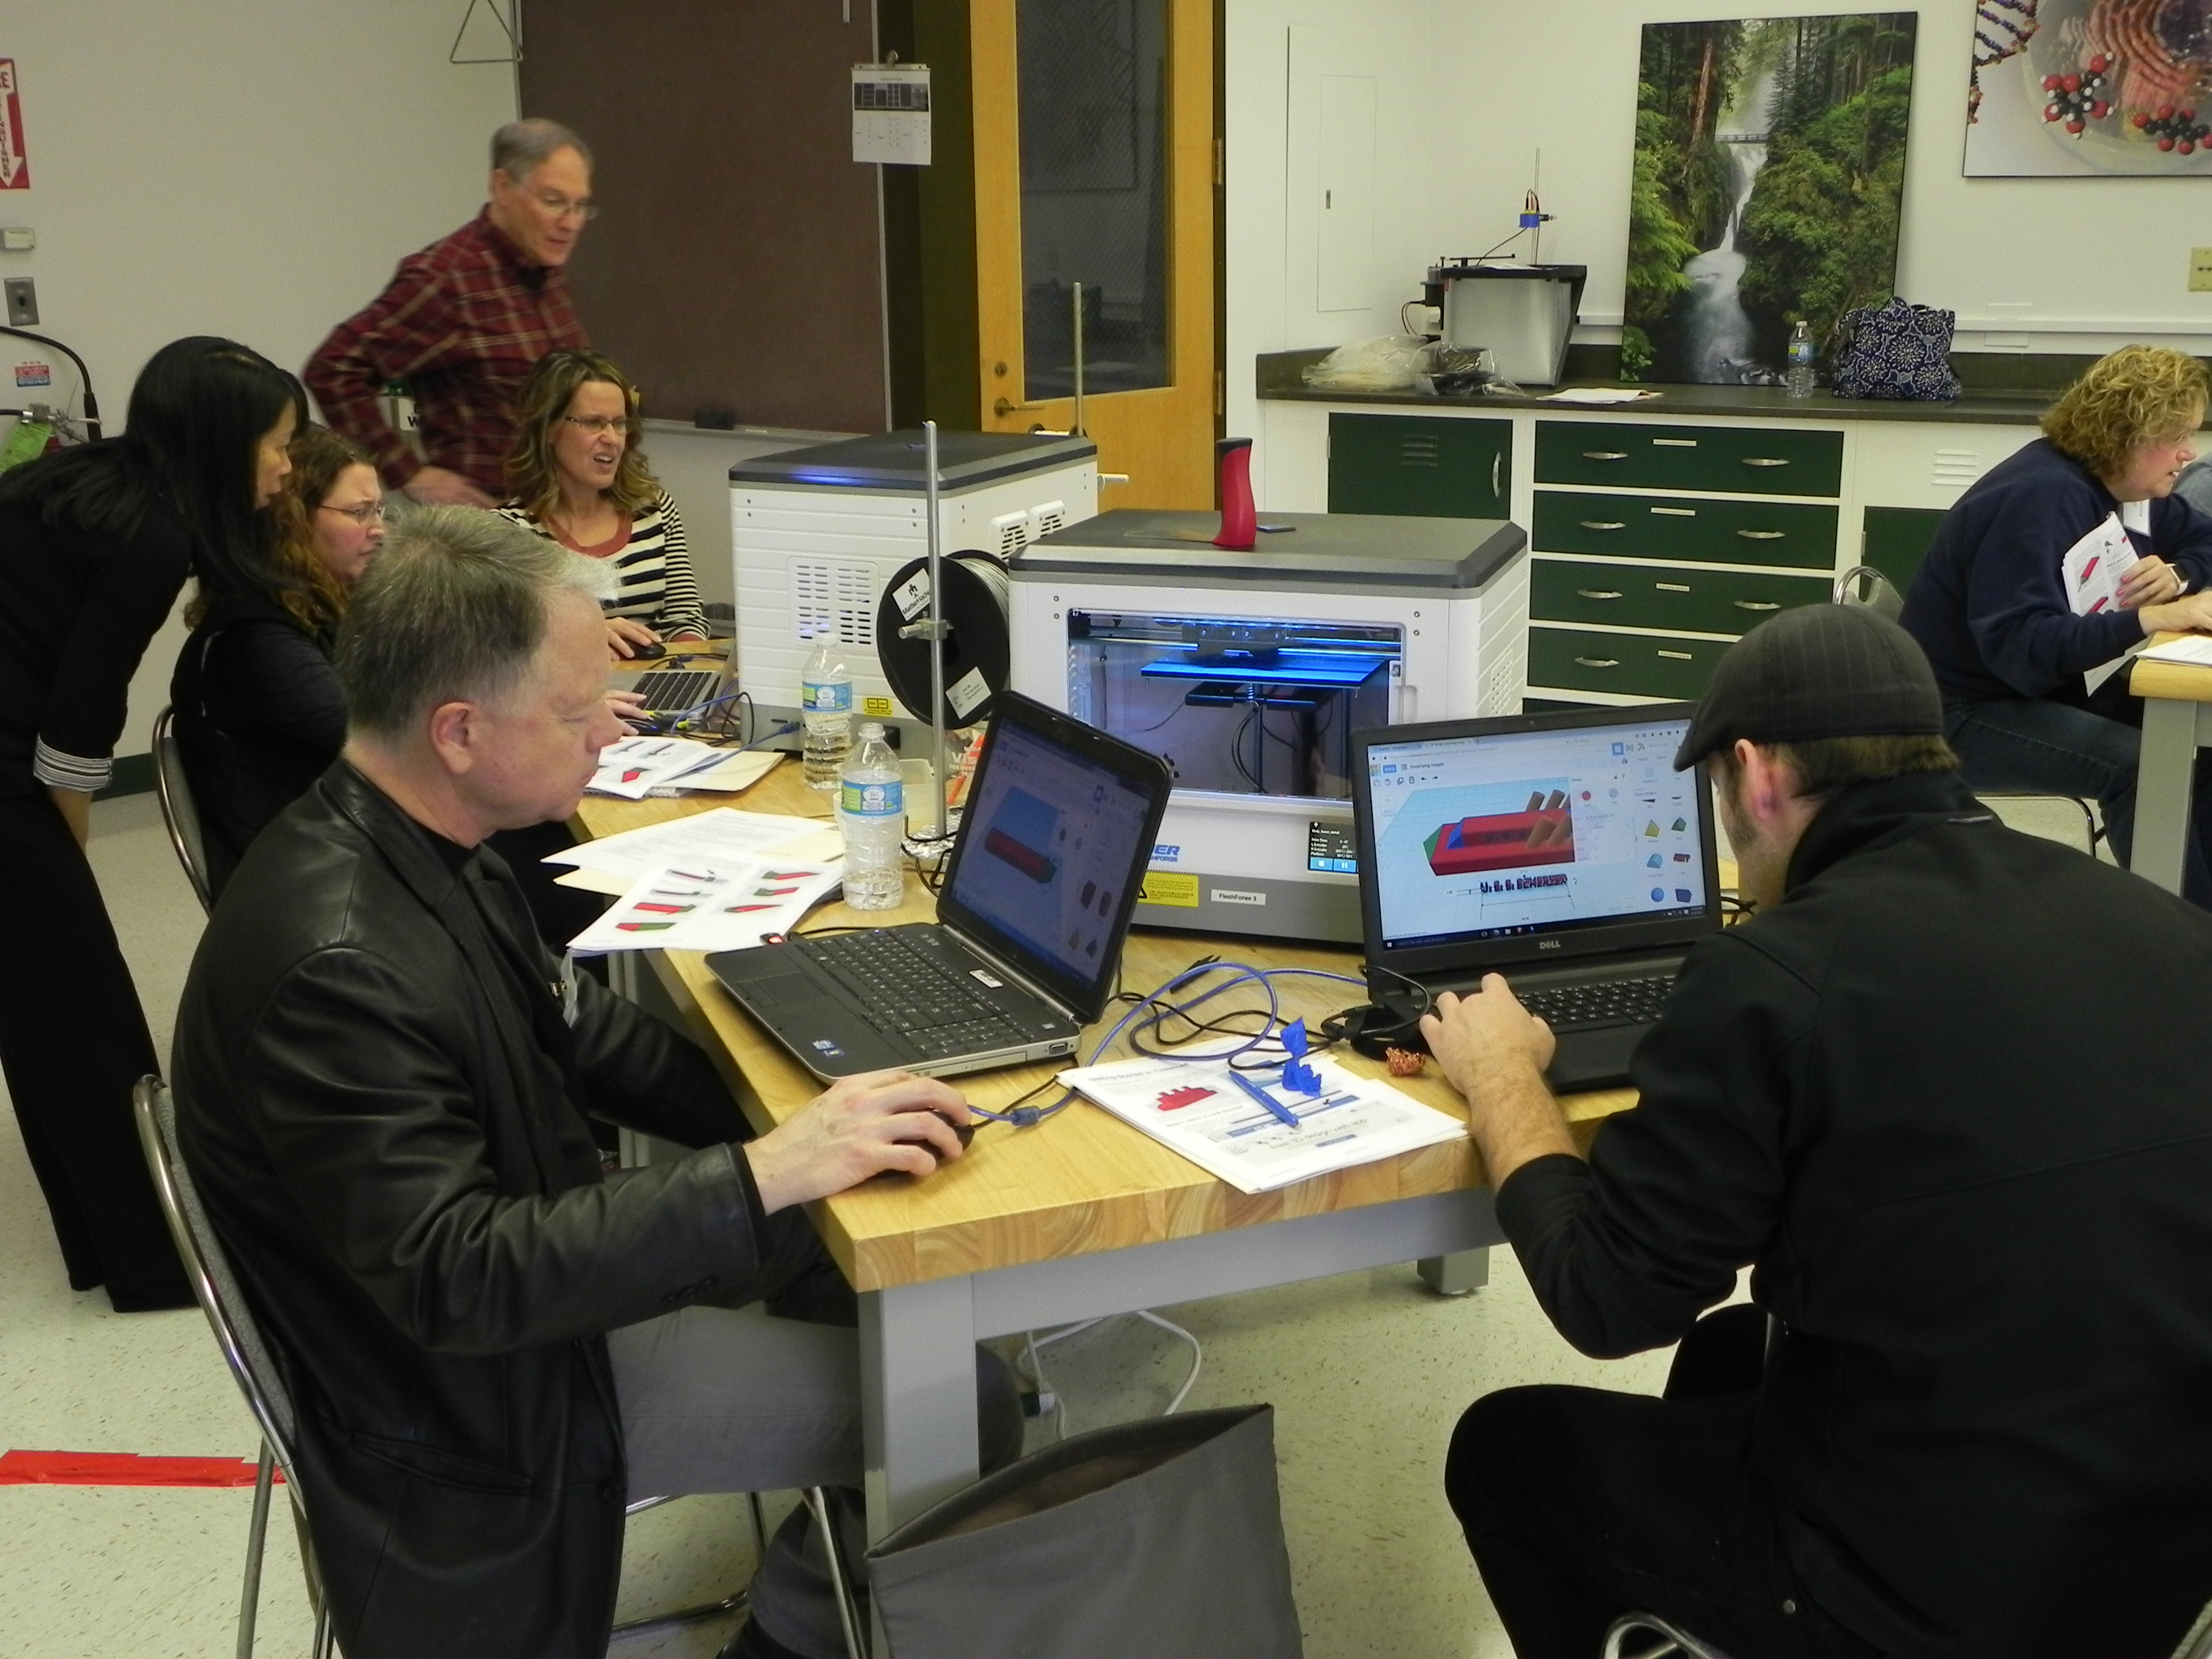 Teachers using 3D printers in a workshop setting